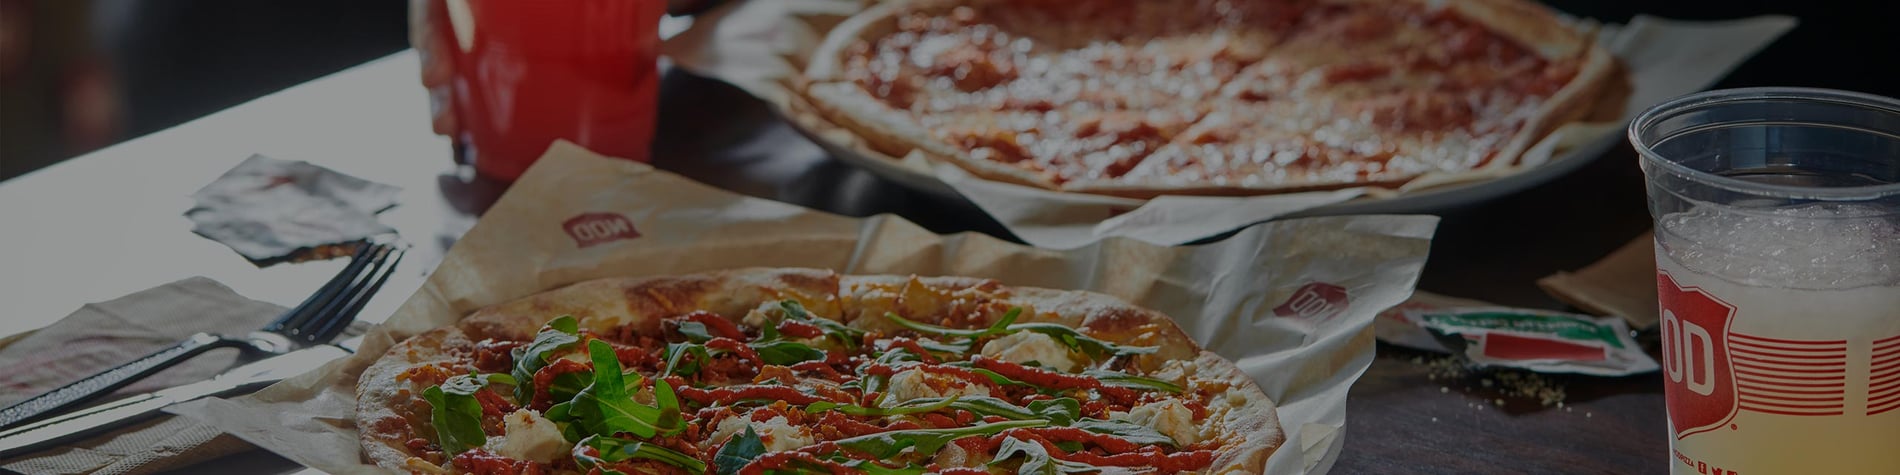 BIG FOOT PIZZA, Pocatello - Menu, Prices & Restaurant Reviews